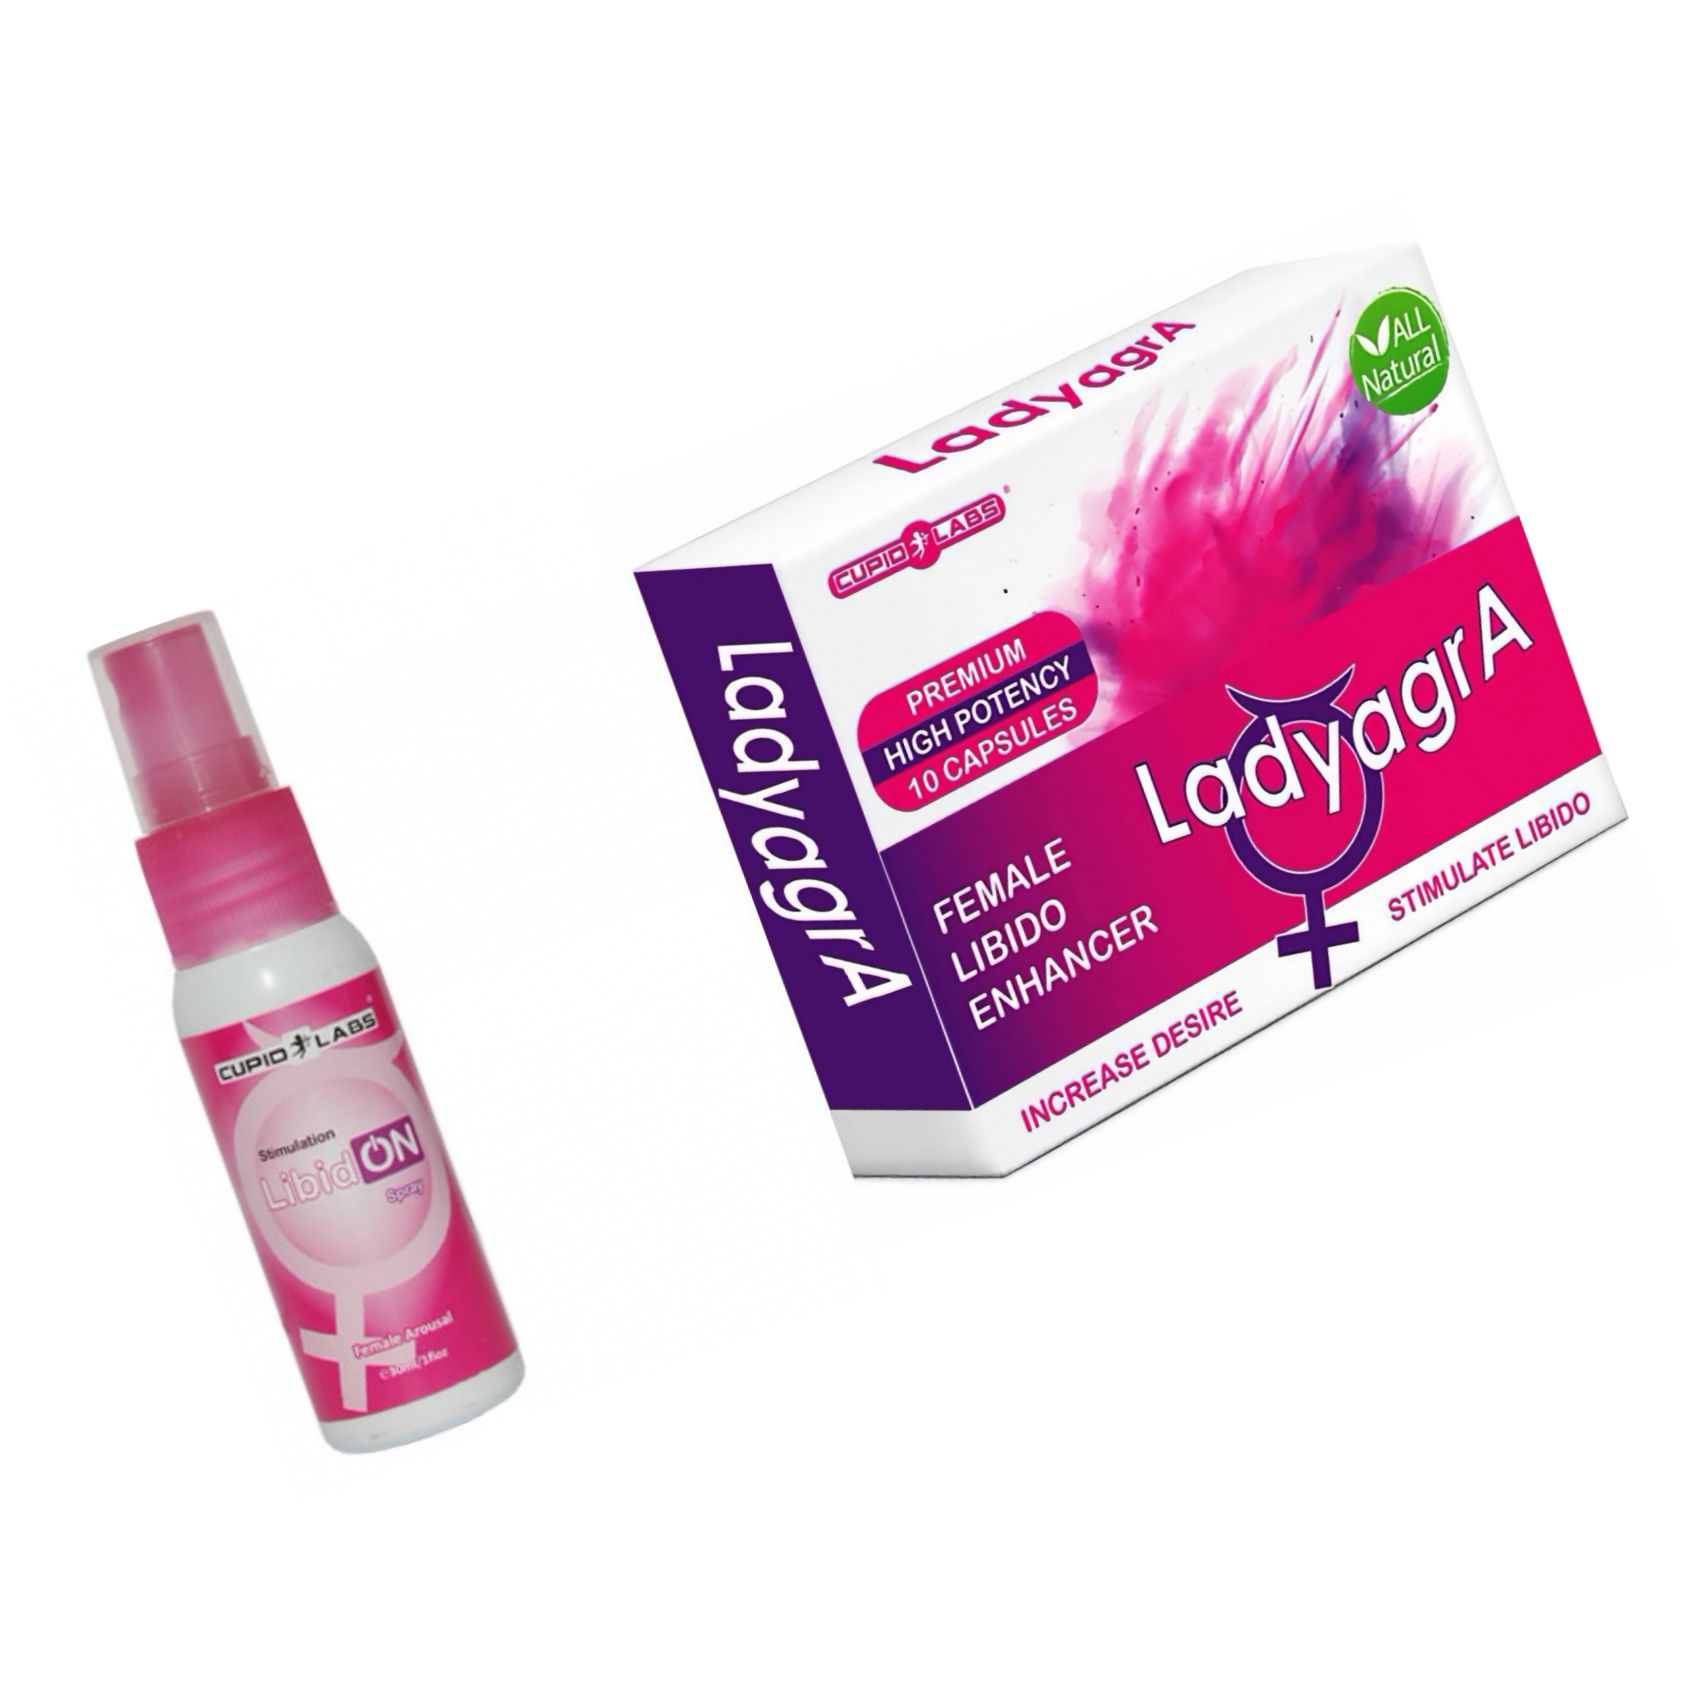 Pachet Pastile Libido Ladyagra 10buc + Spray Femei LibidON 30ml